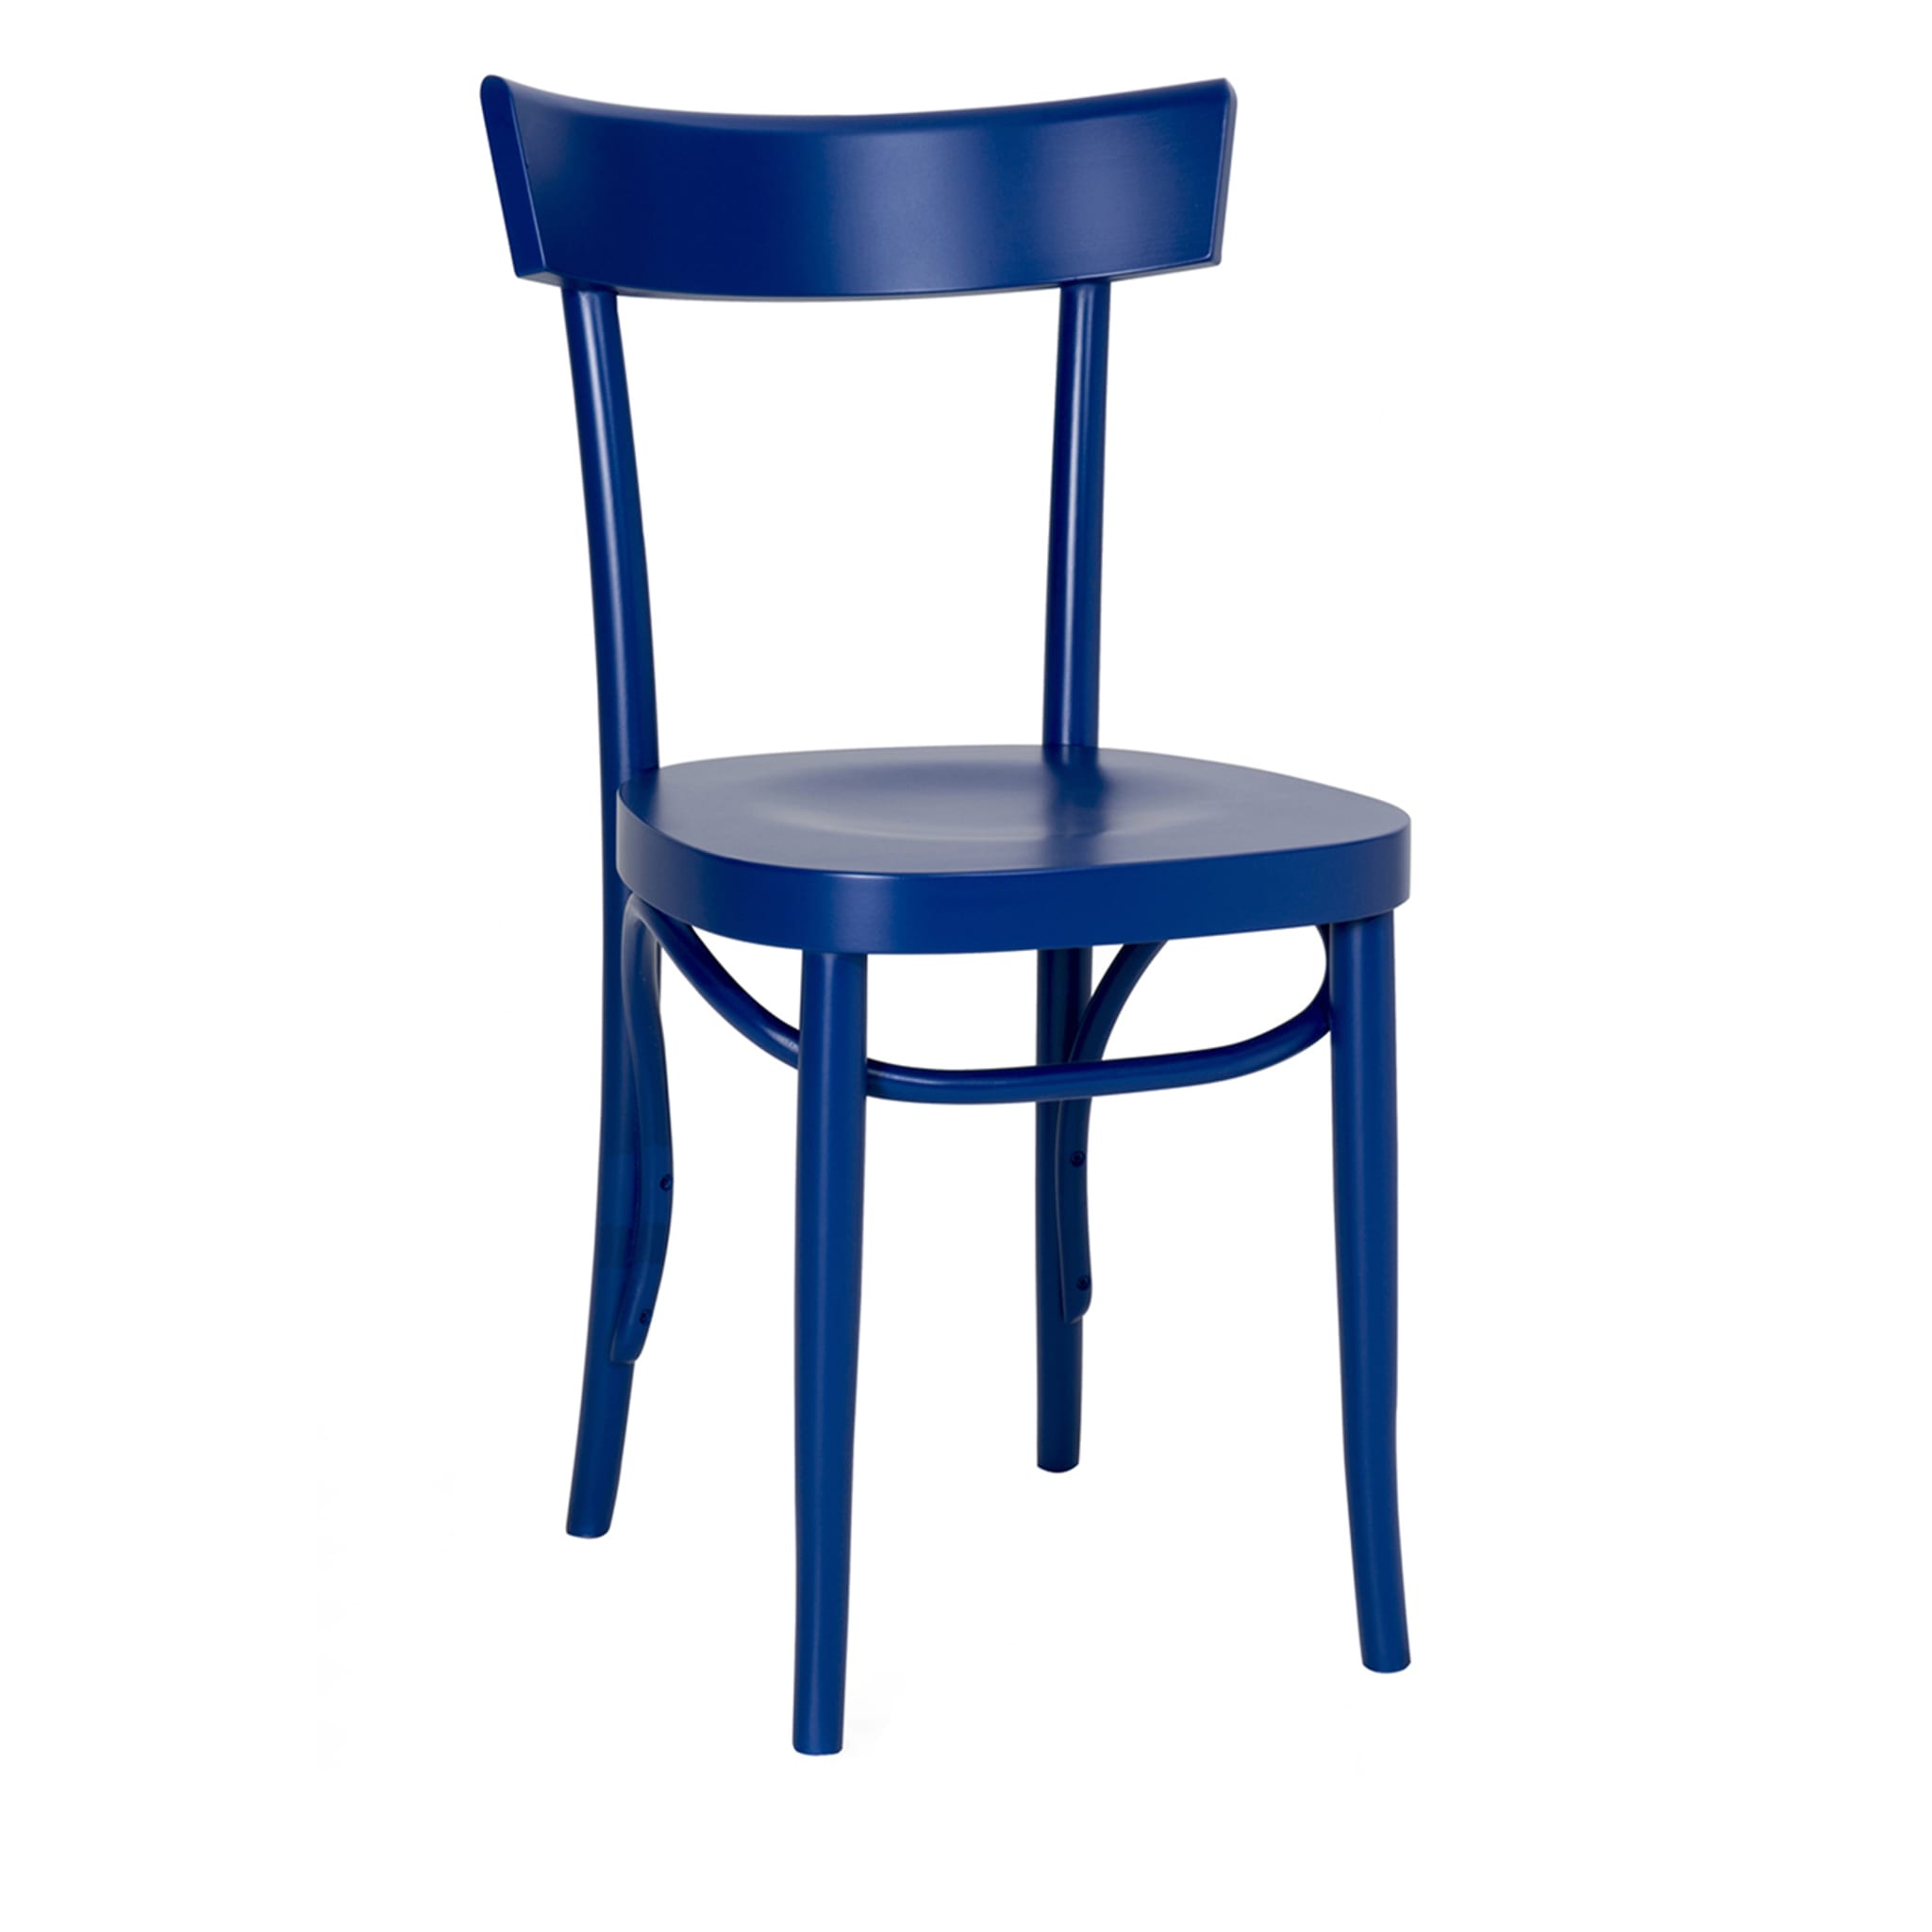 Brera Ultramarine Chair by W. Colico - Main view